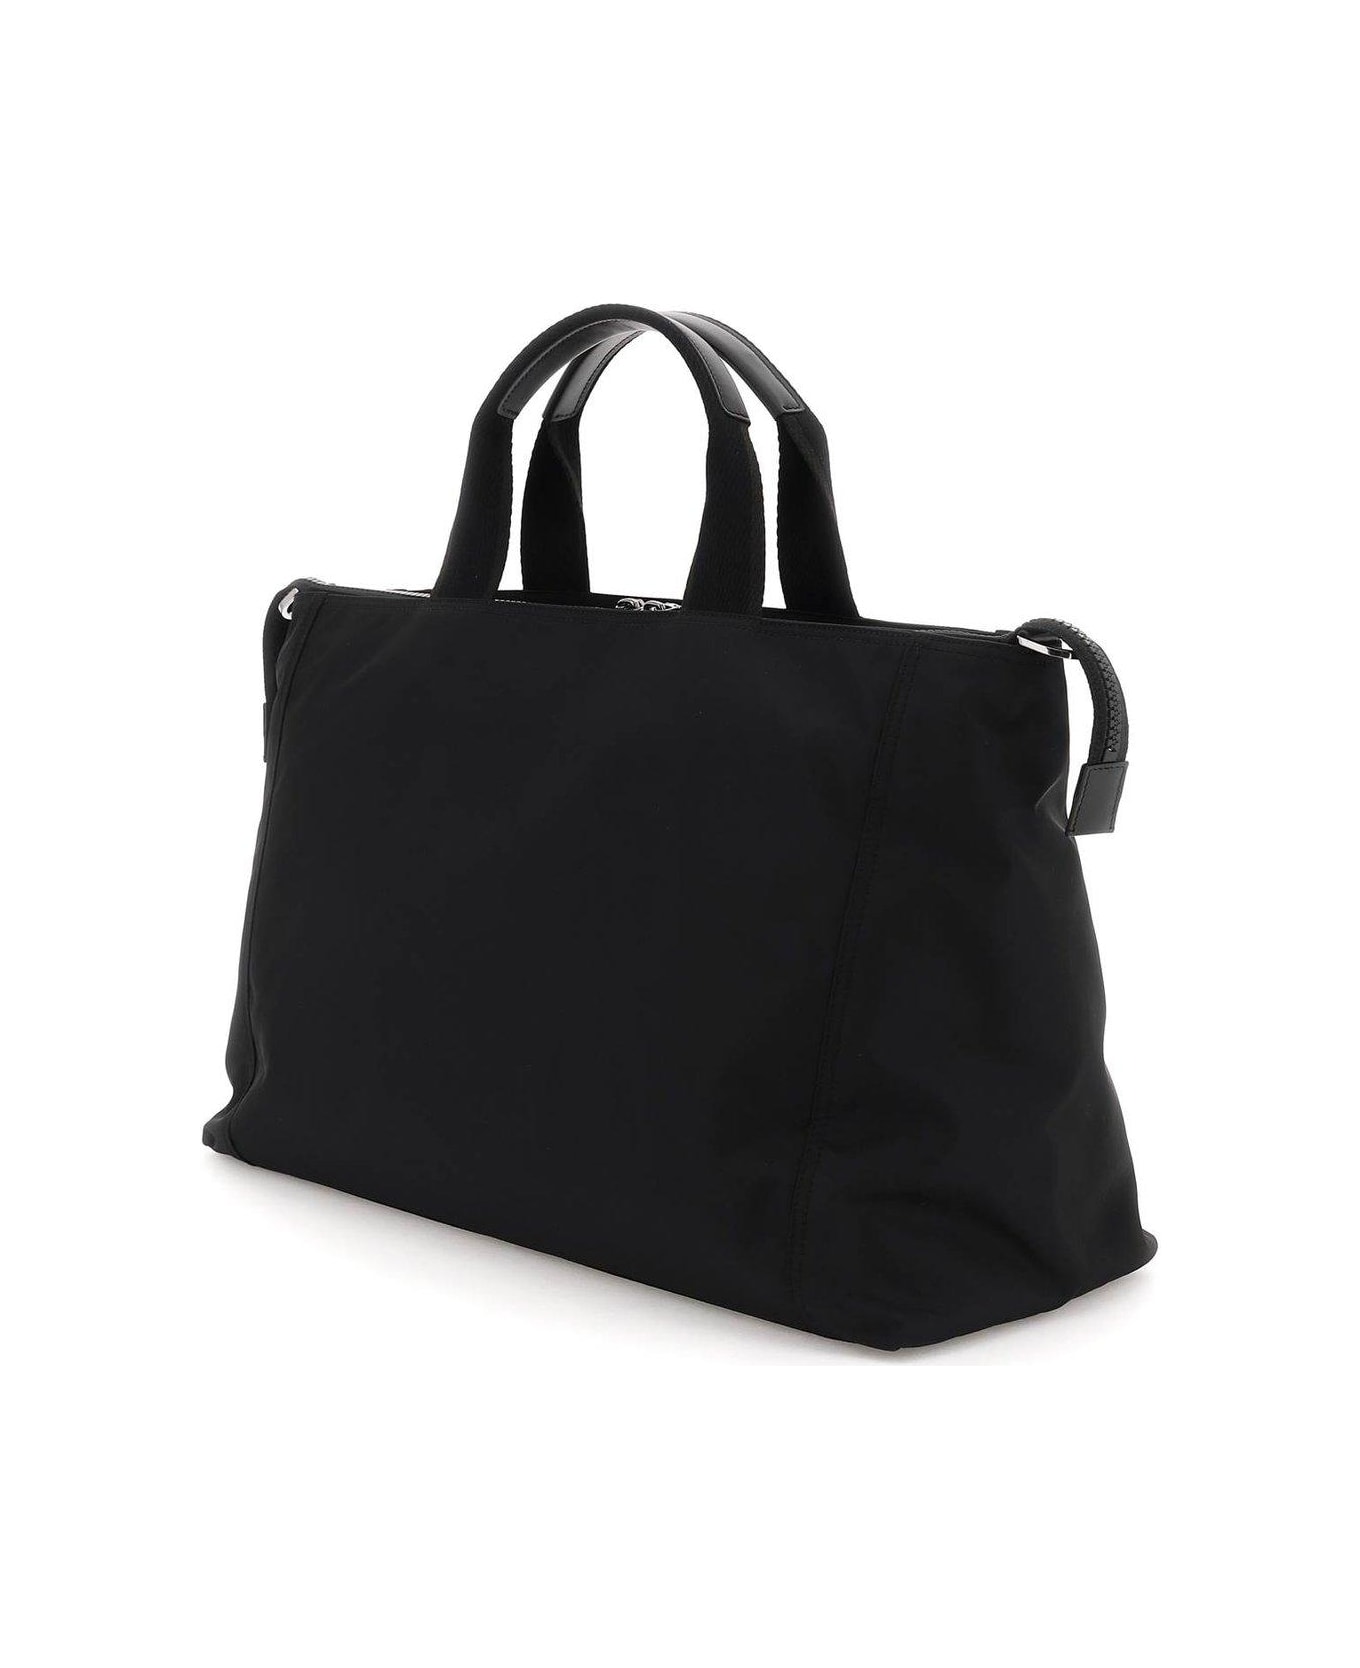 Dolce & Gabbana Logo Printed Zipped Travel Bag - Nero